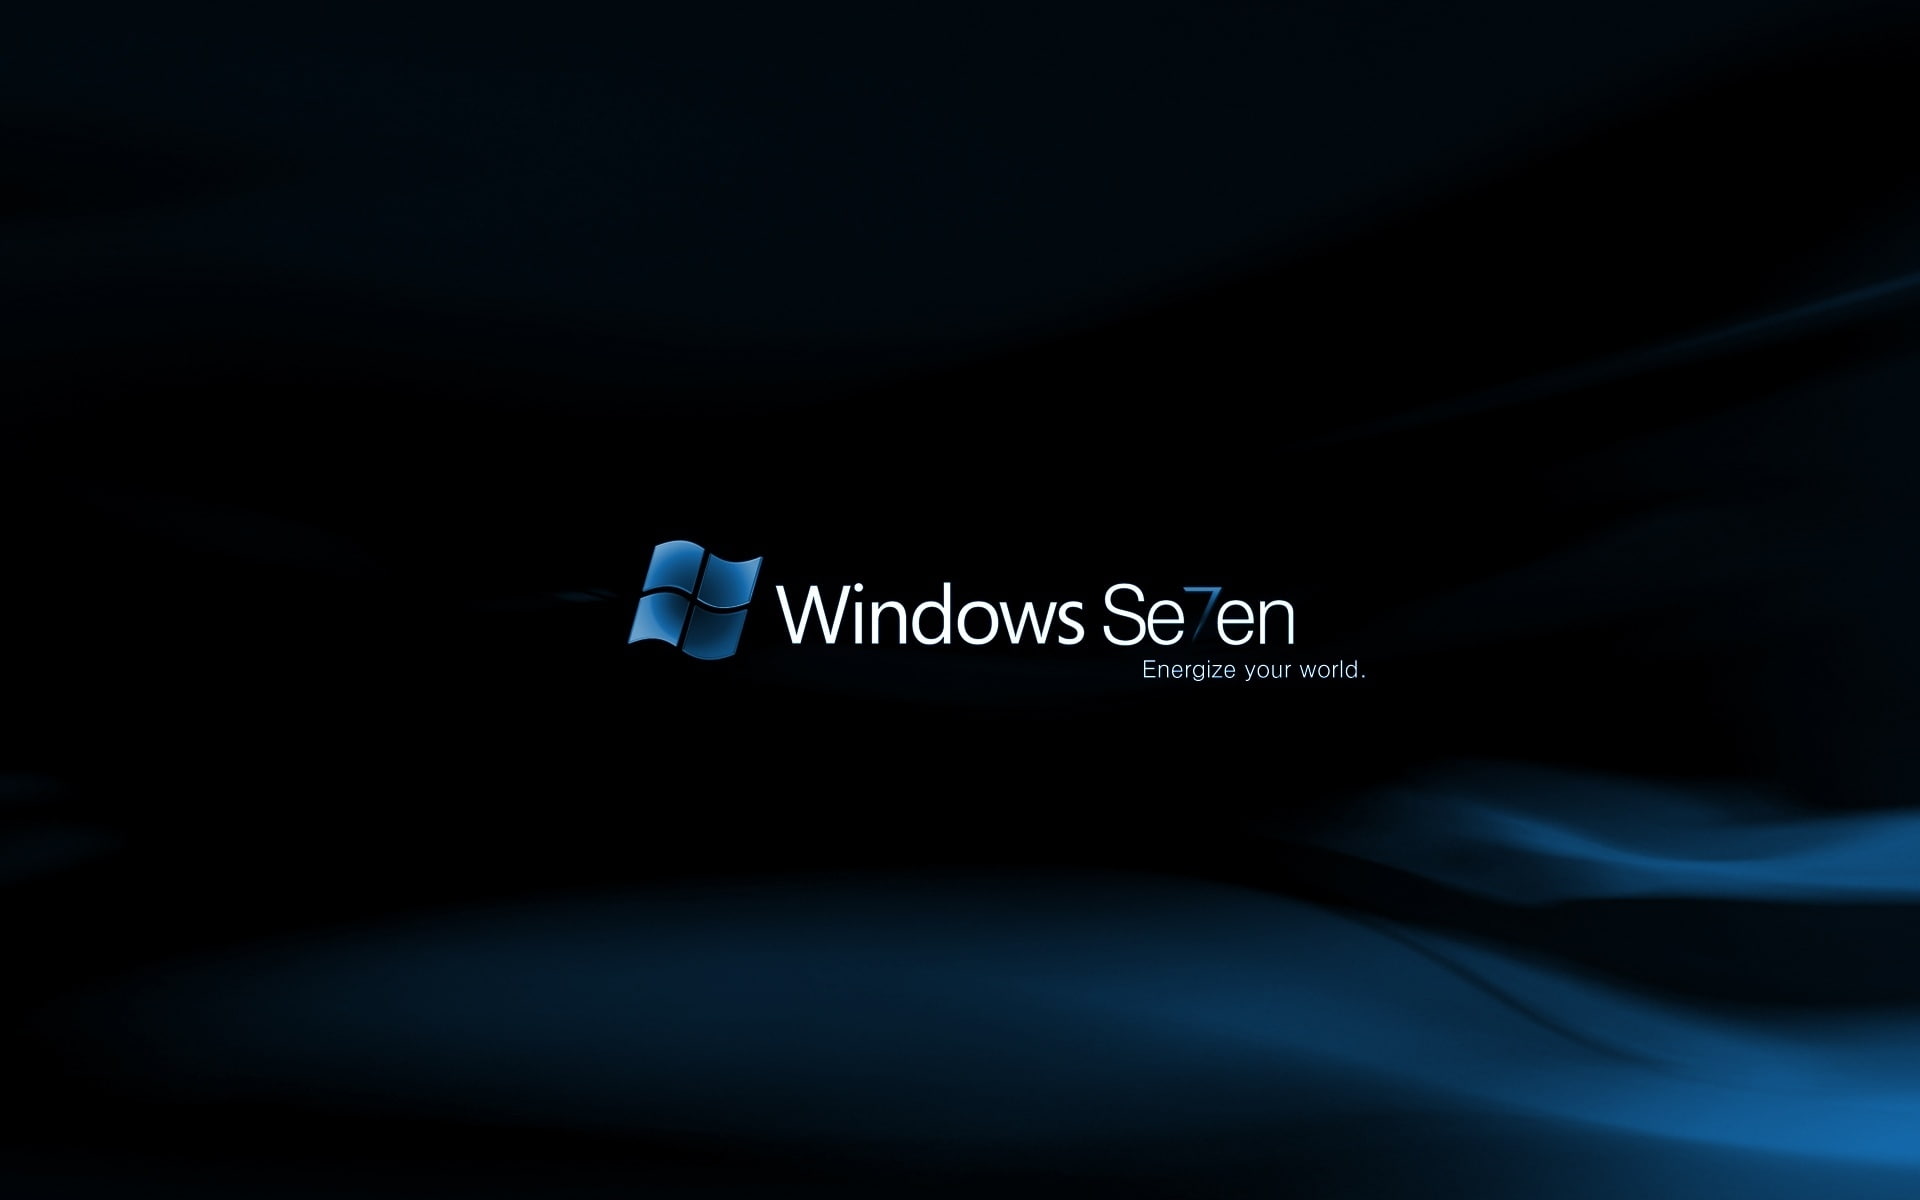 Windows Se7en Midnight, windows se7en logo, microsoft, Windows 7